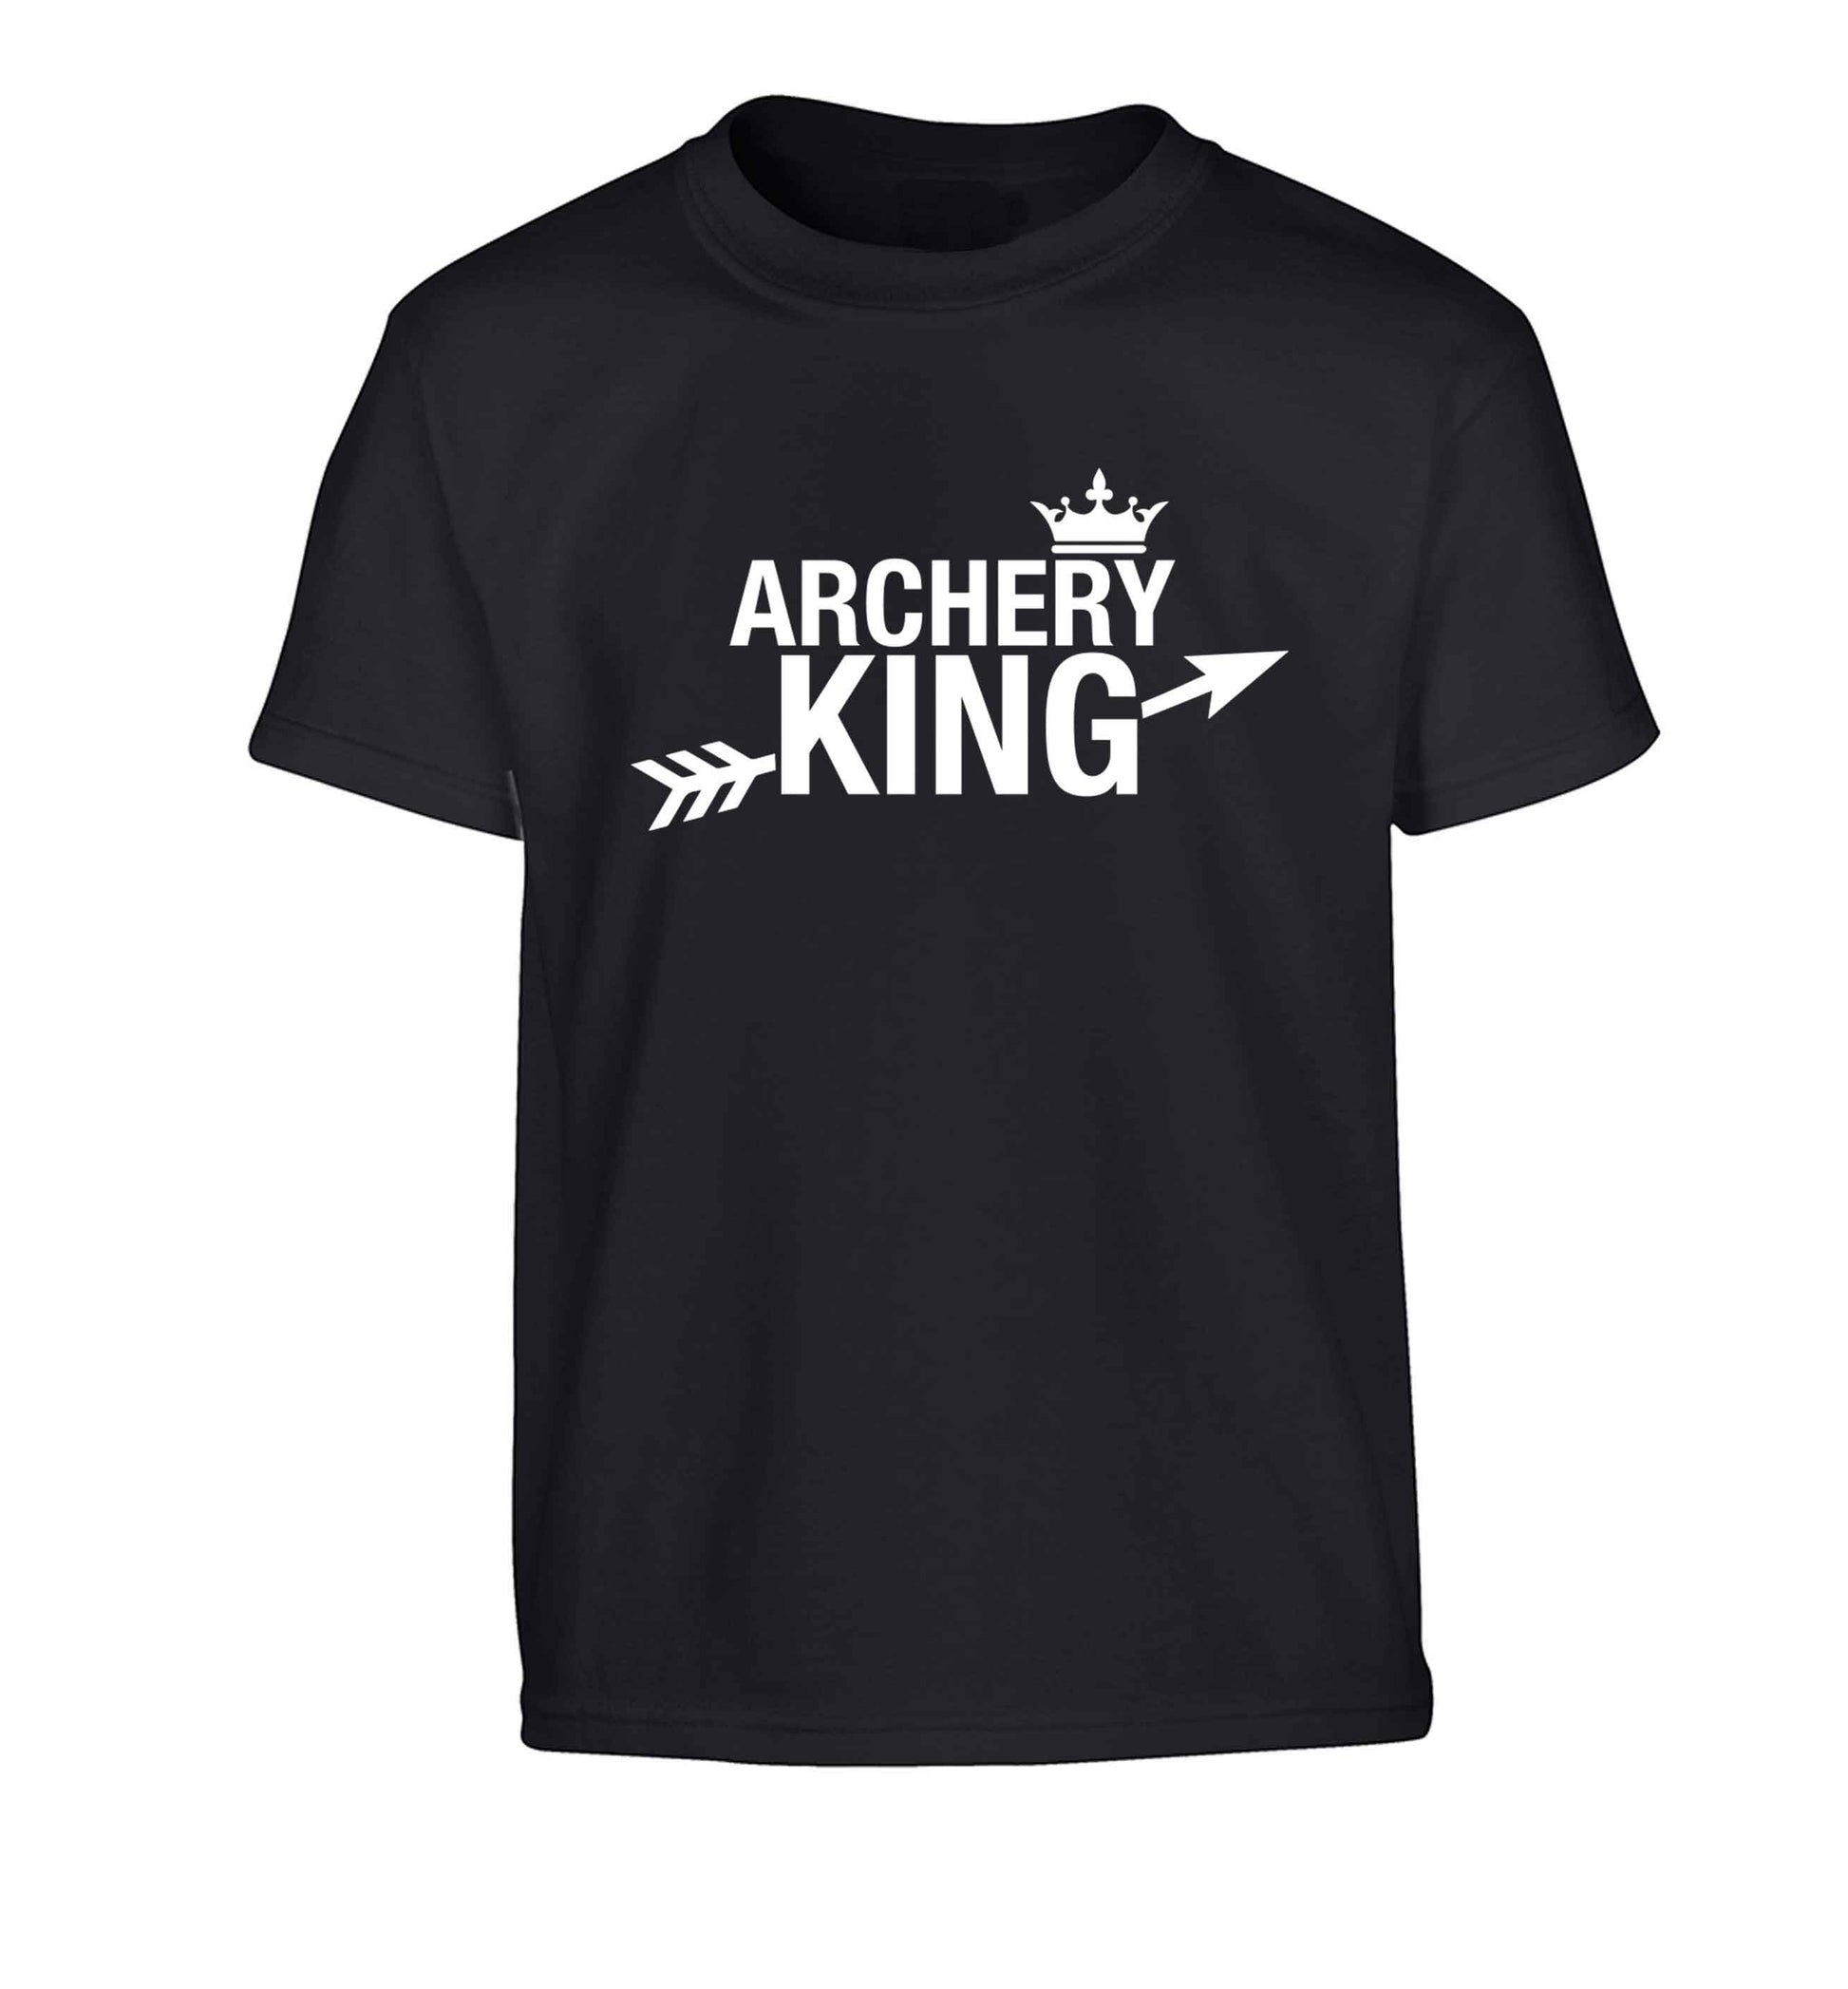 Archery king Children's black Tshirt 12-13 Years